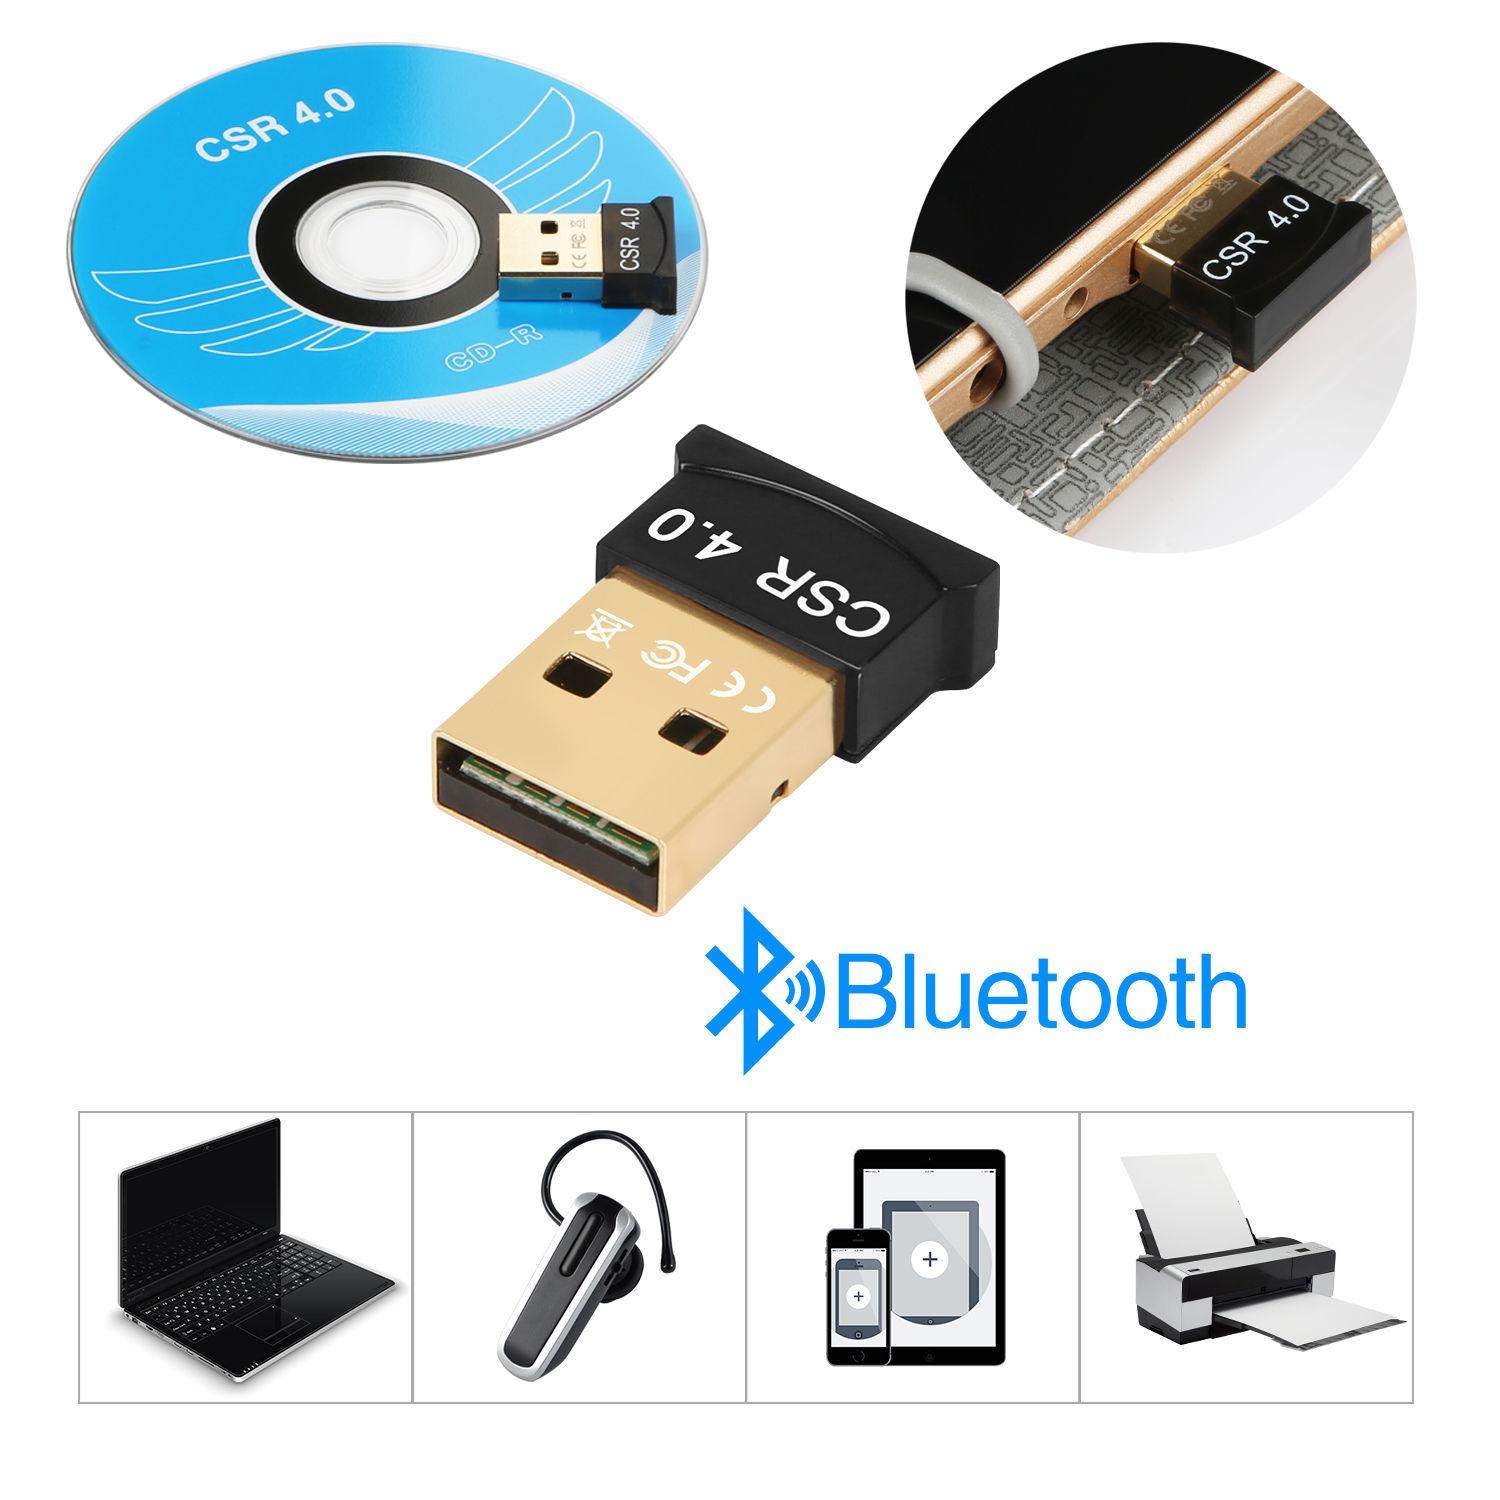 Mini USB Bluetooth 4.0 Adapter CSR Wireless Dongle EDR for PC Win7 8 10 Vista